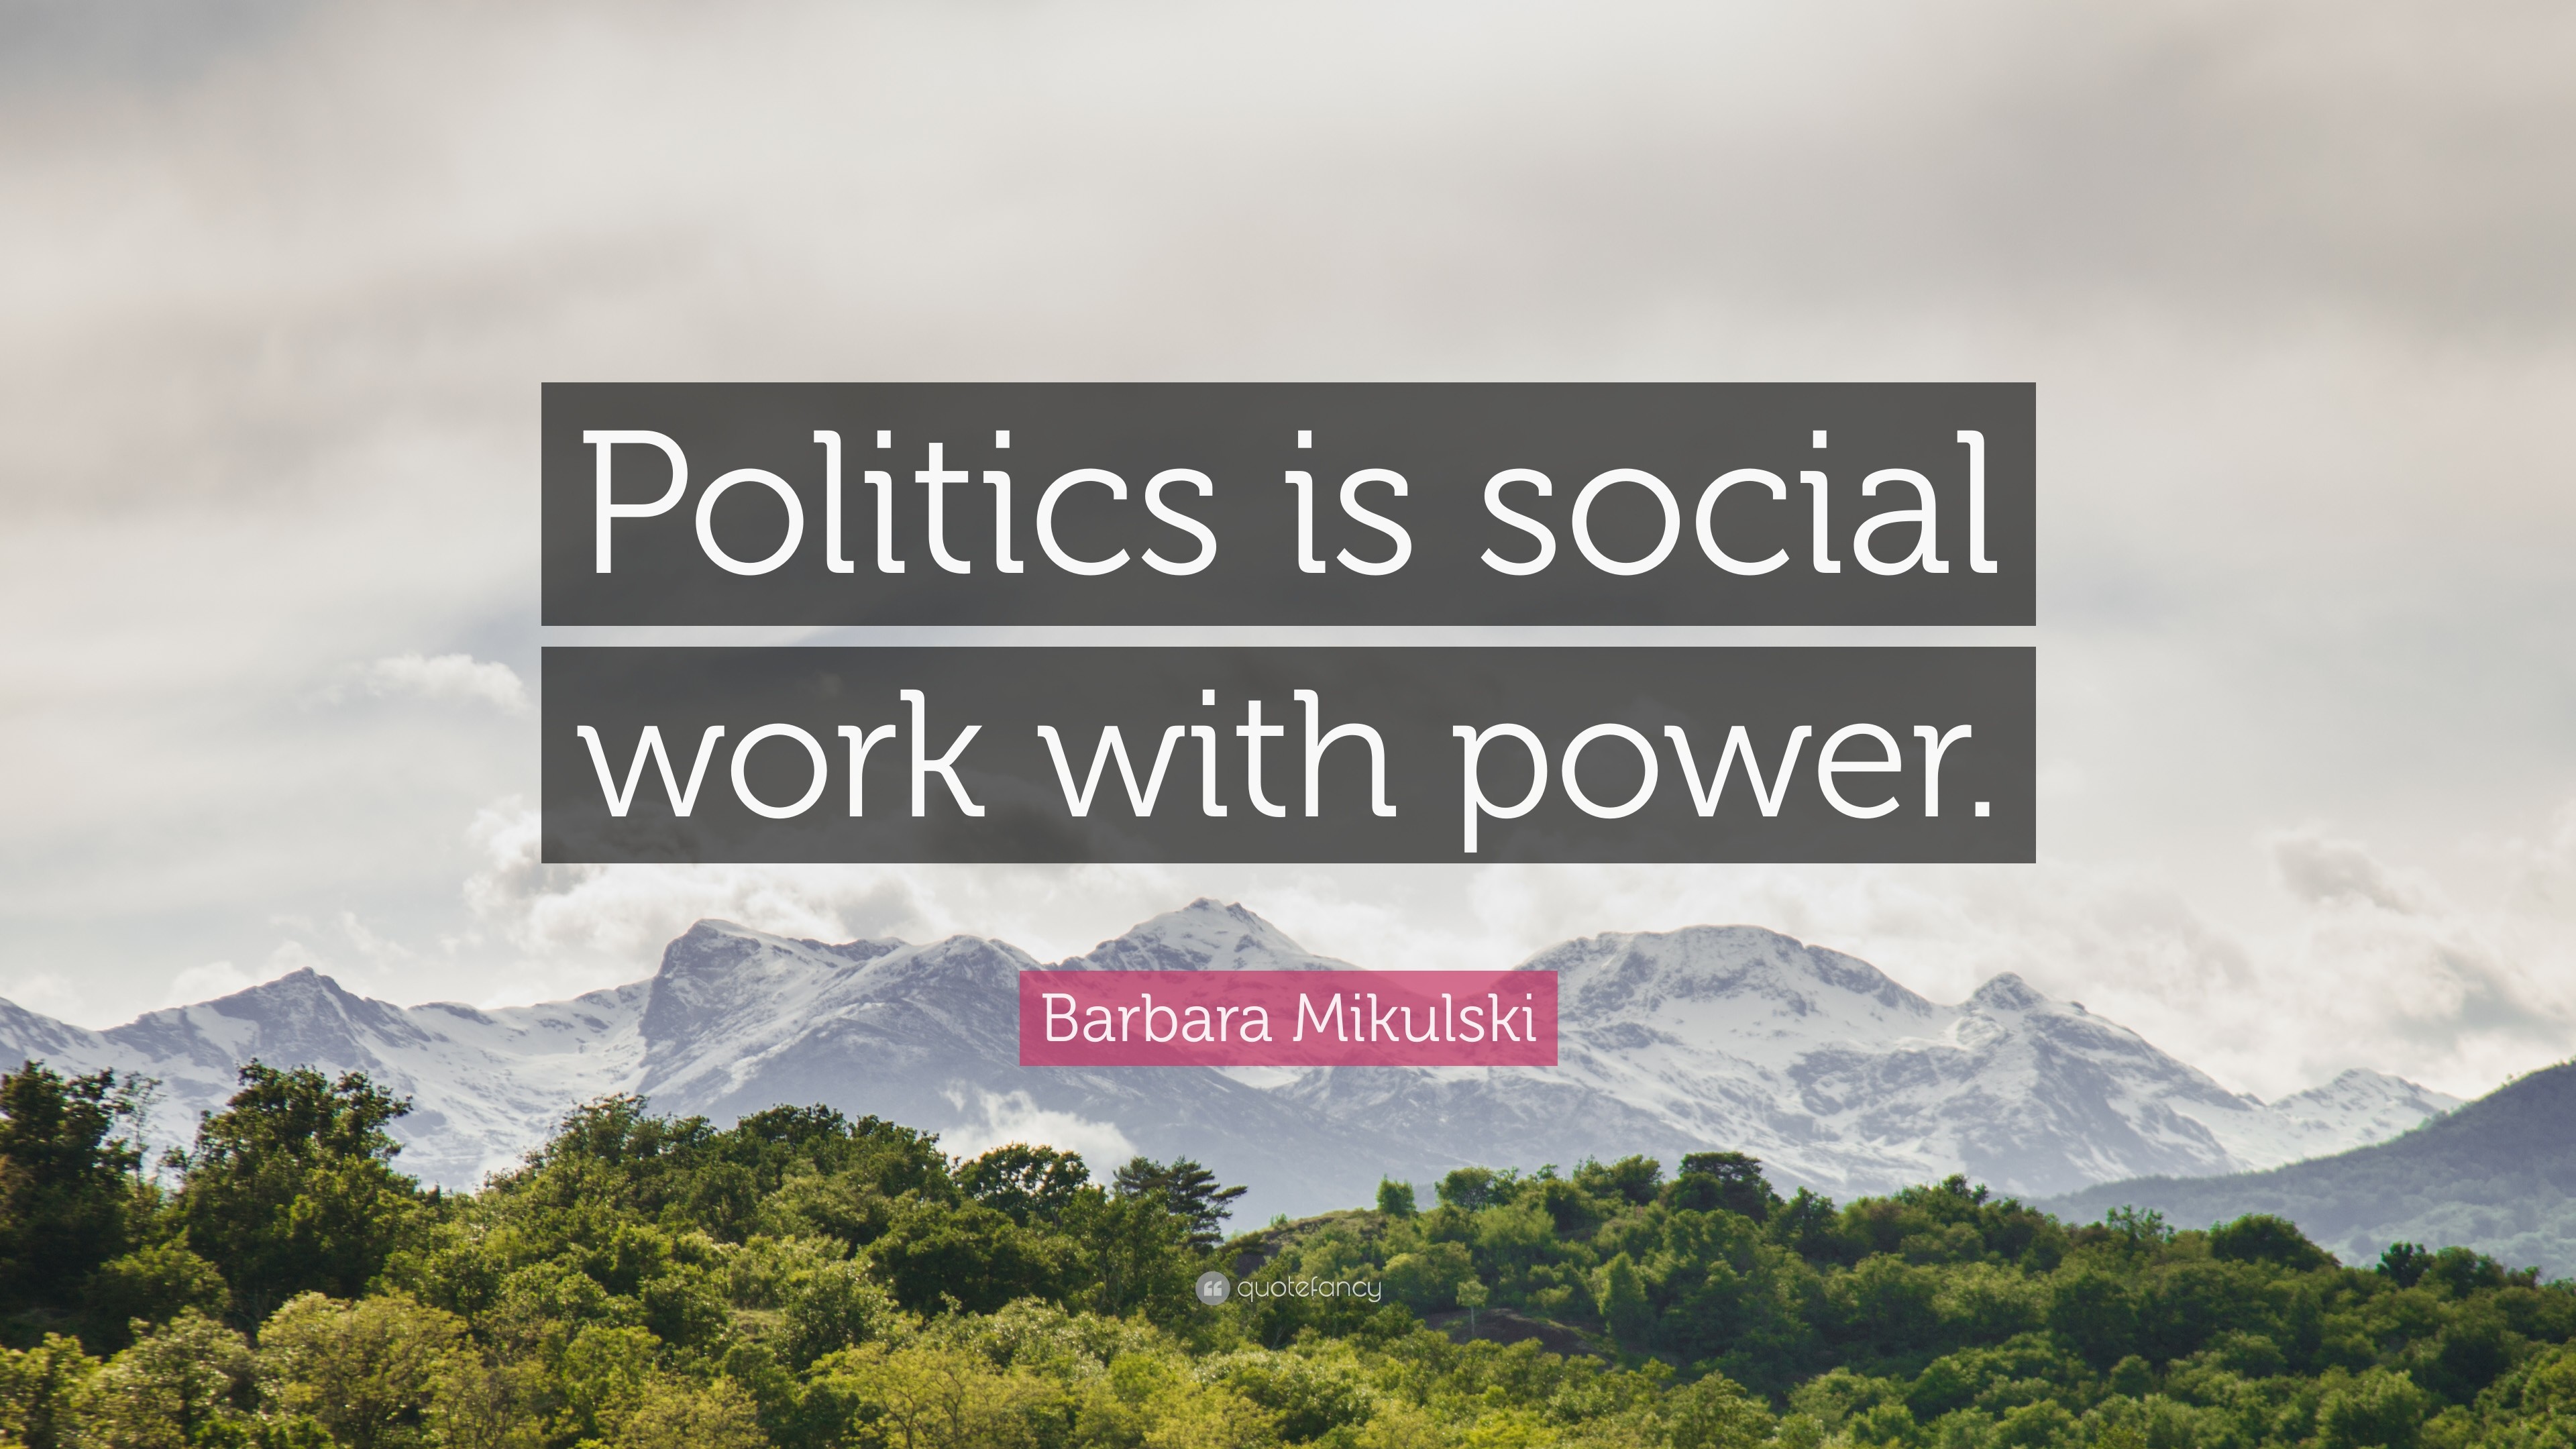 3840x2160 Barbara Mikulski Quote: “Politics is social work with power.”